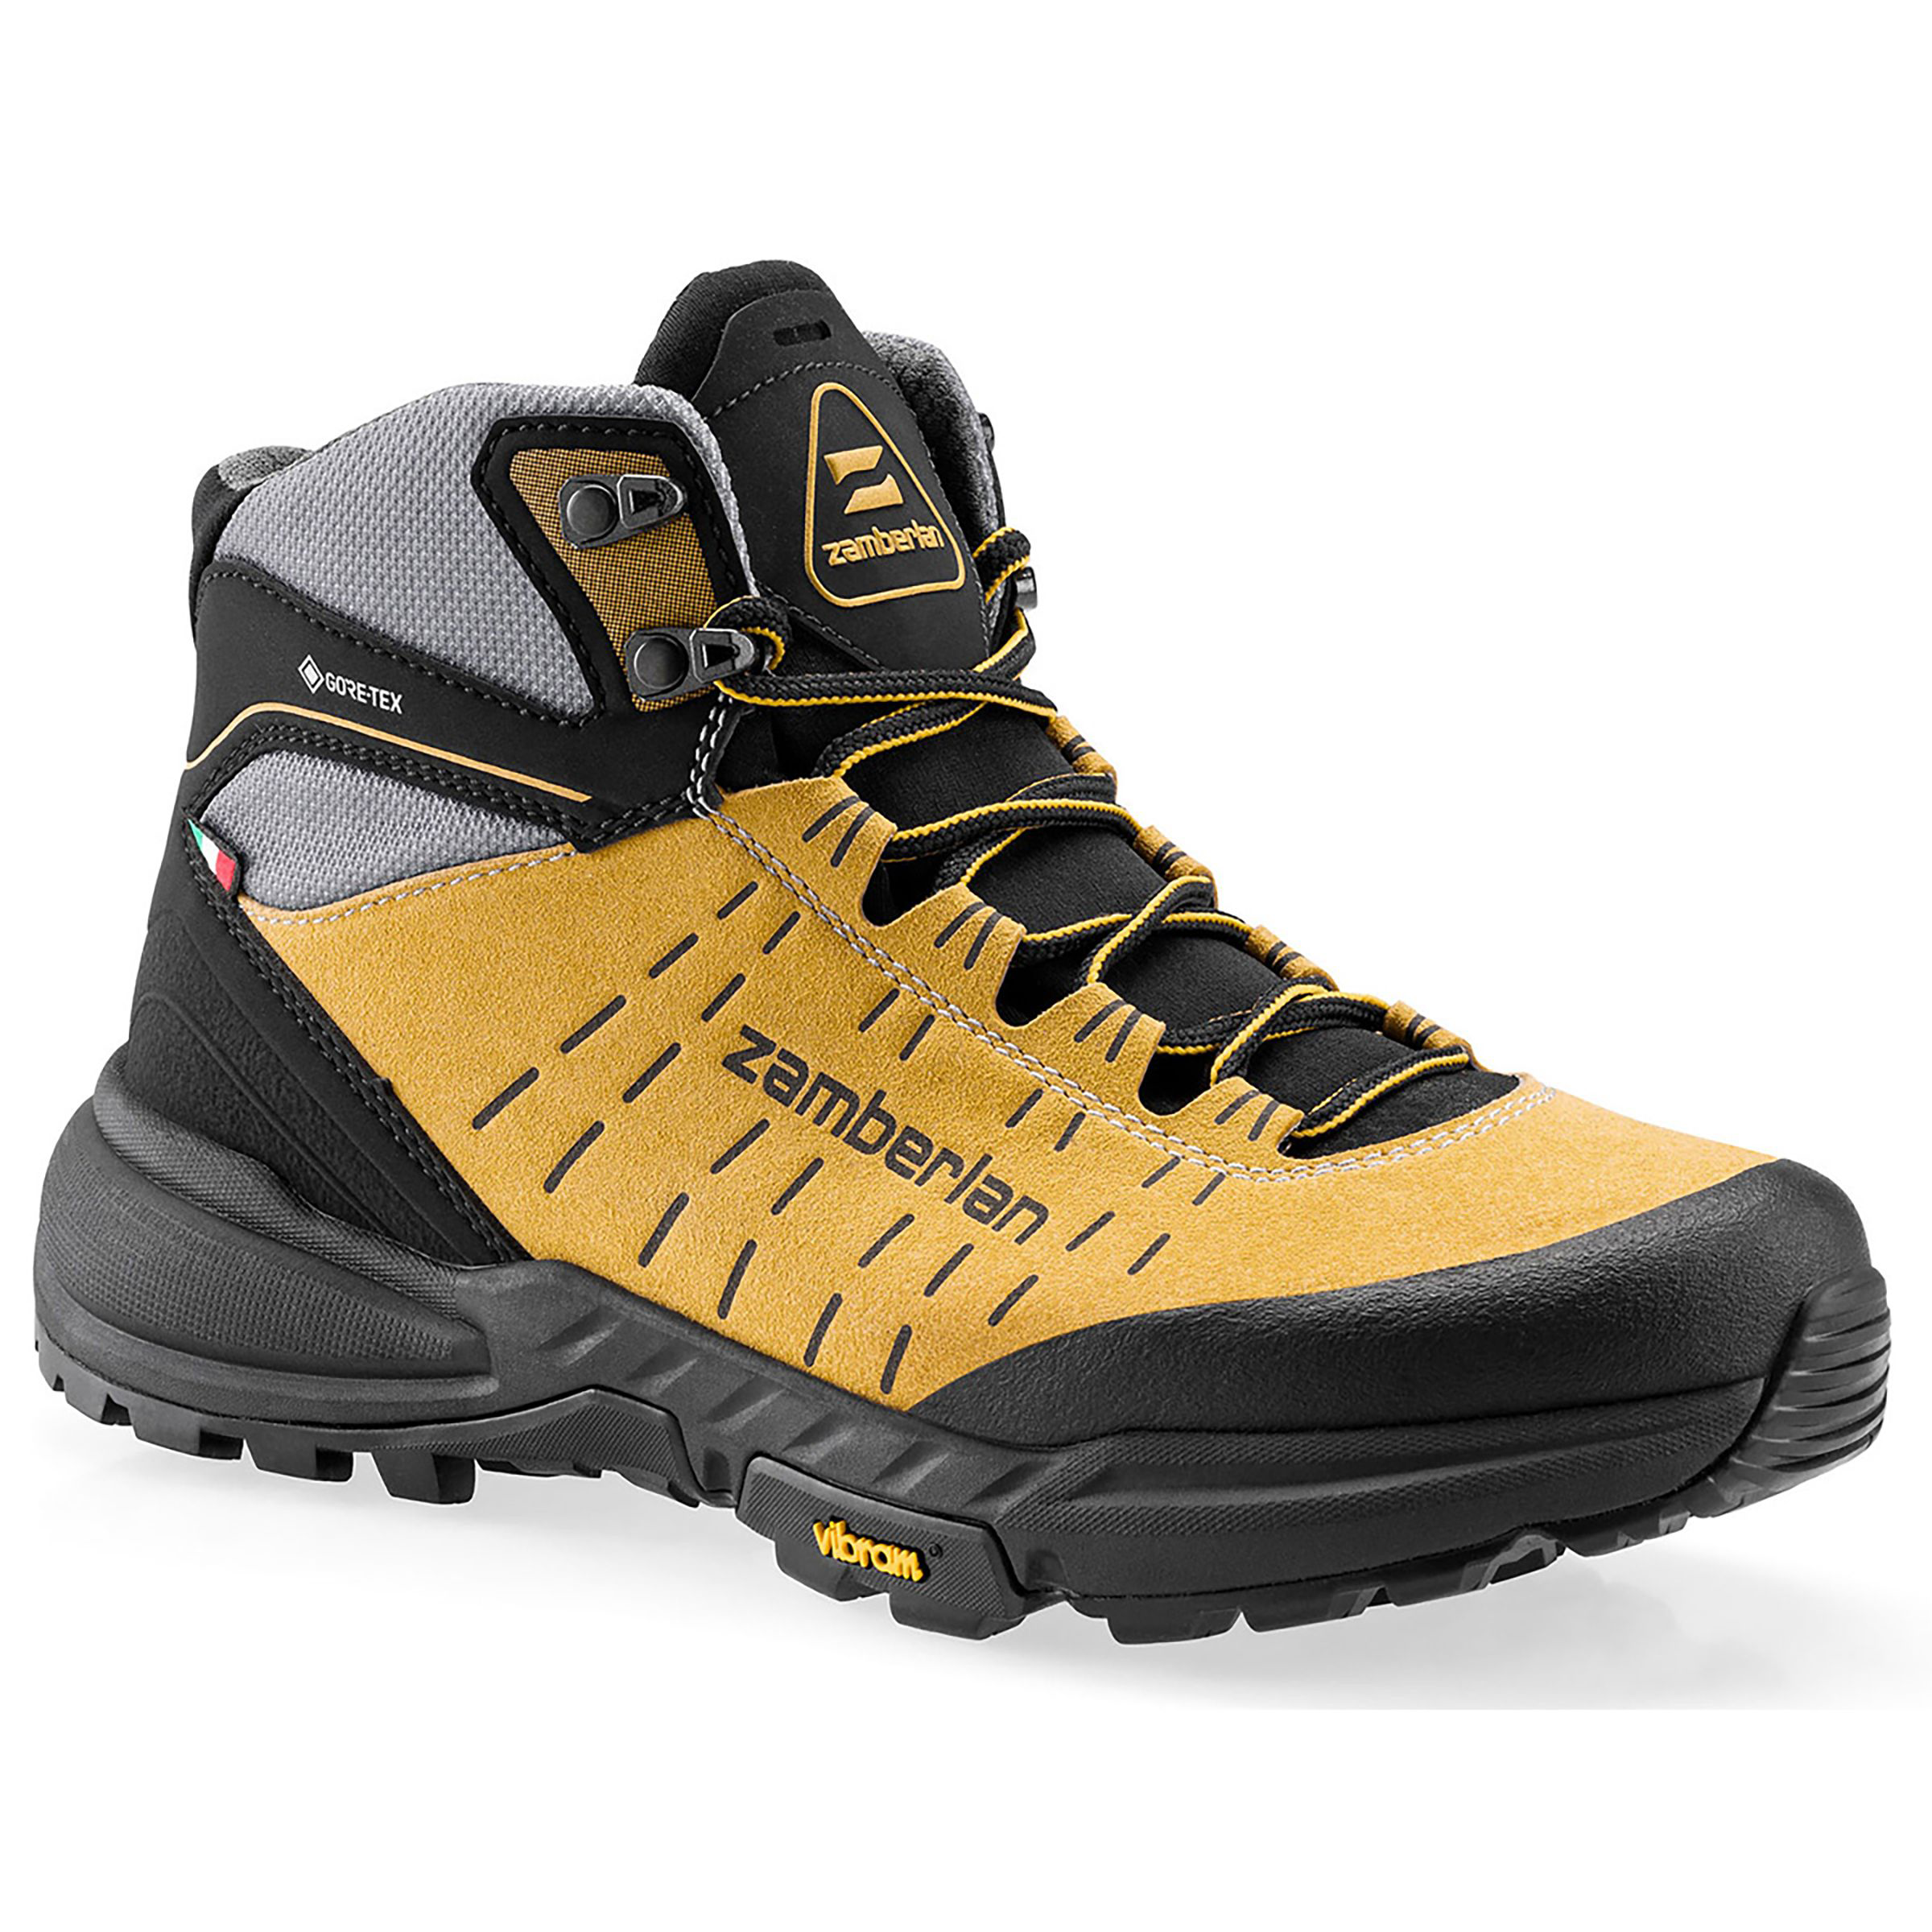 Zamberlan 334 Circe GTX Waterproof Hiking Boots for Ladies - Yellow - 10M